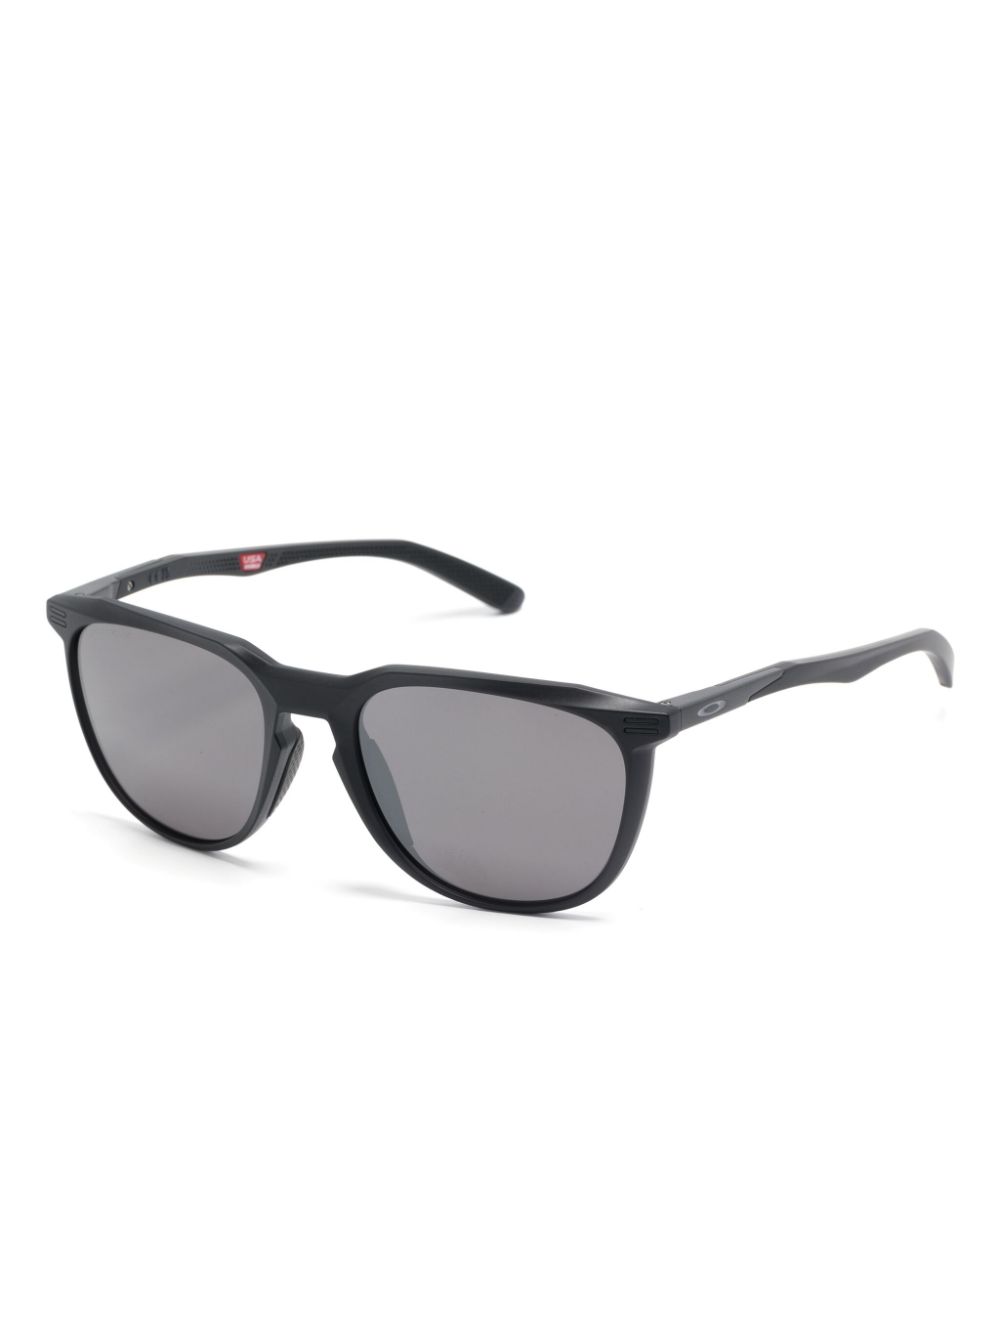 Thurso rectangle-frame sunglasses<BR/><BR/><BR/>